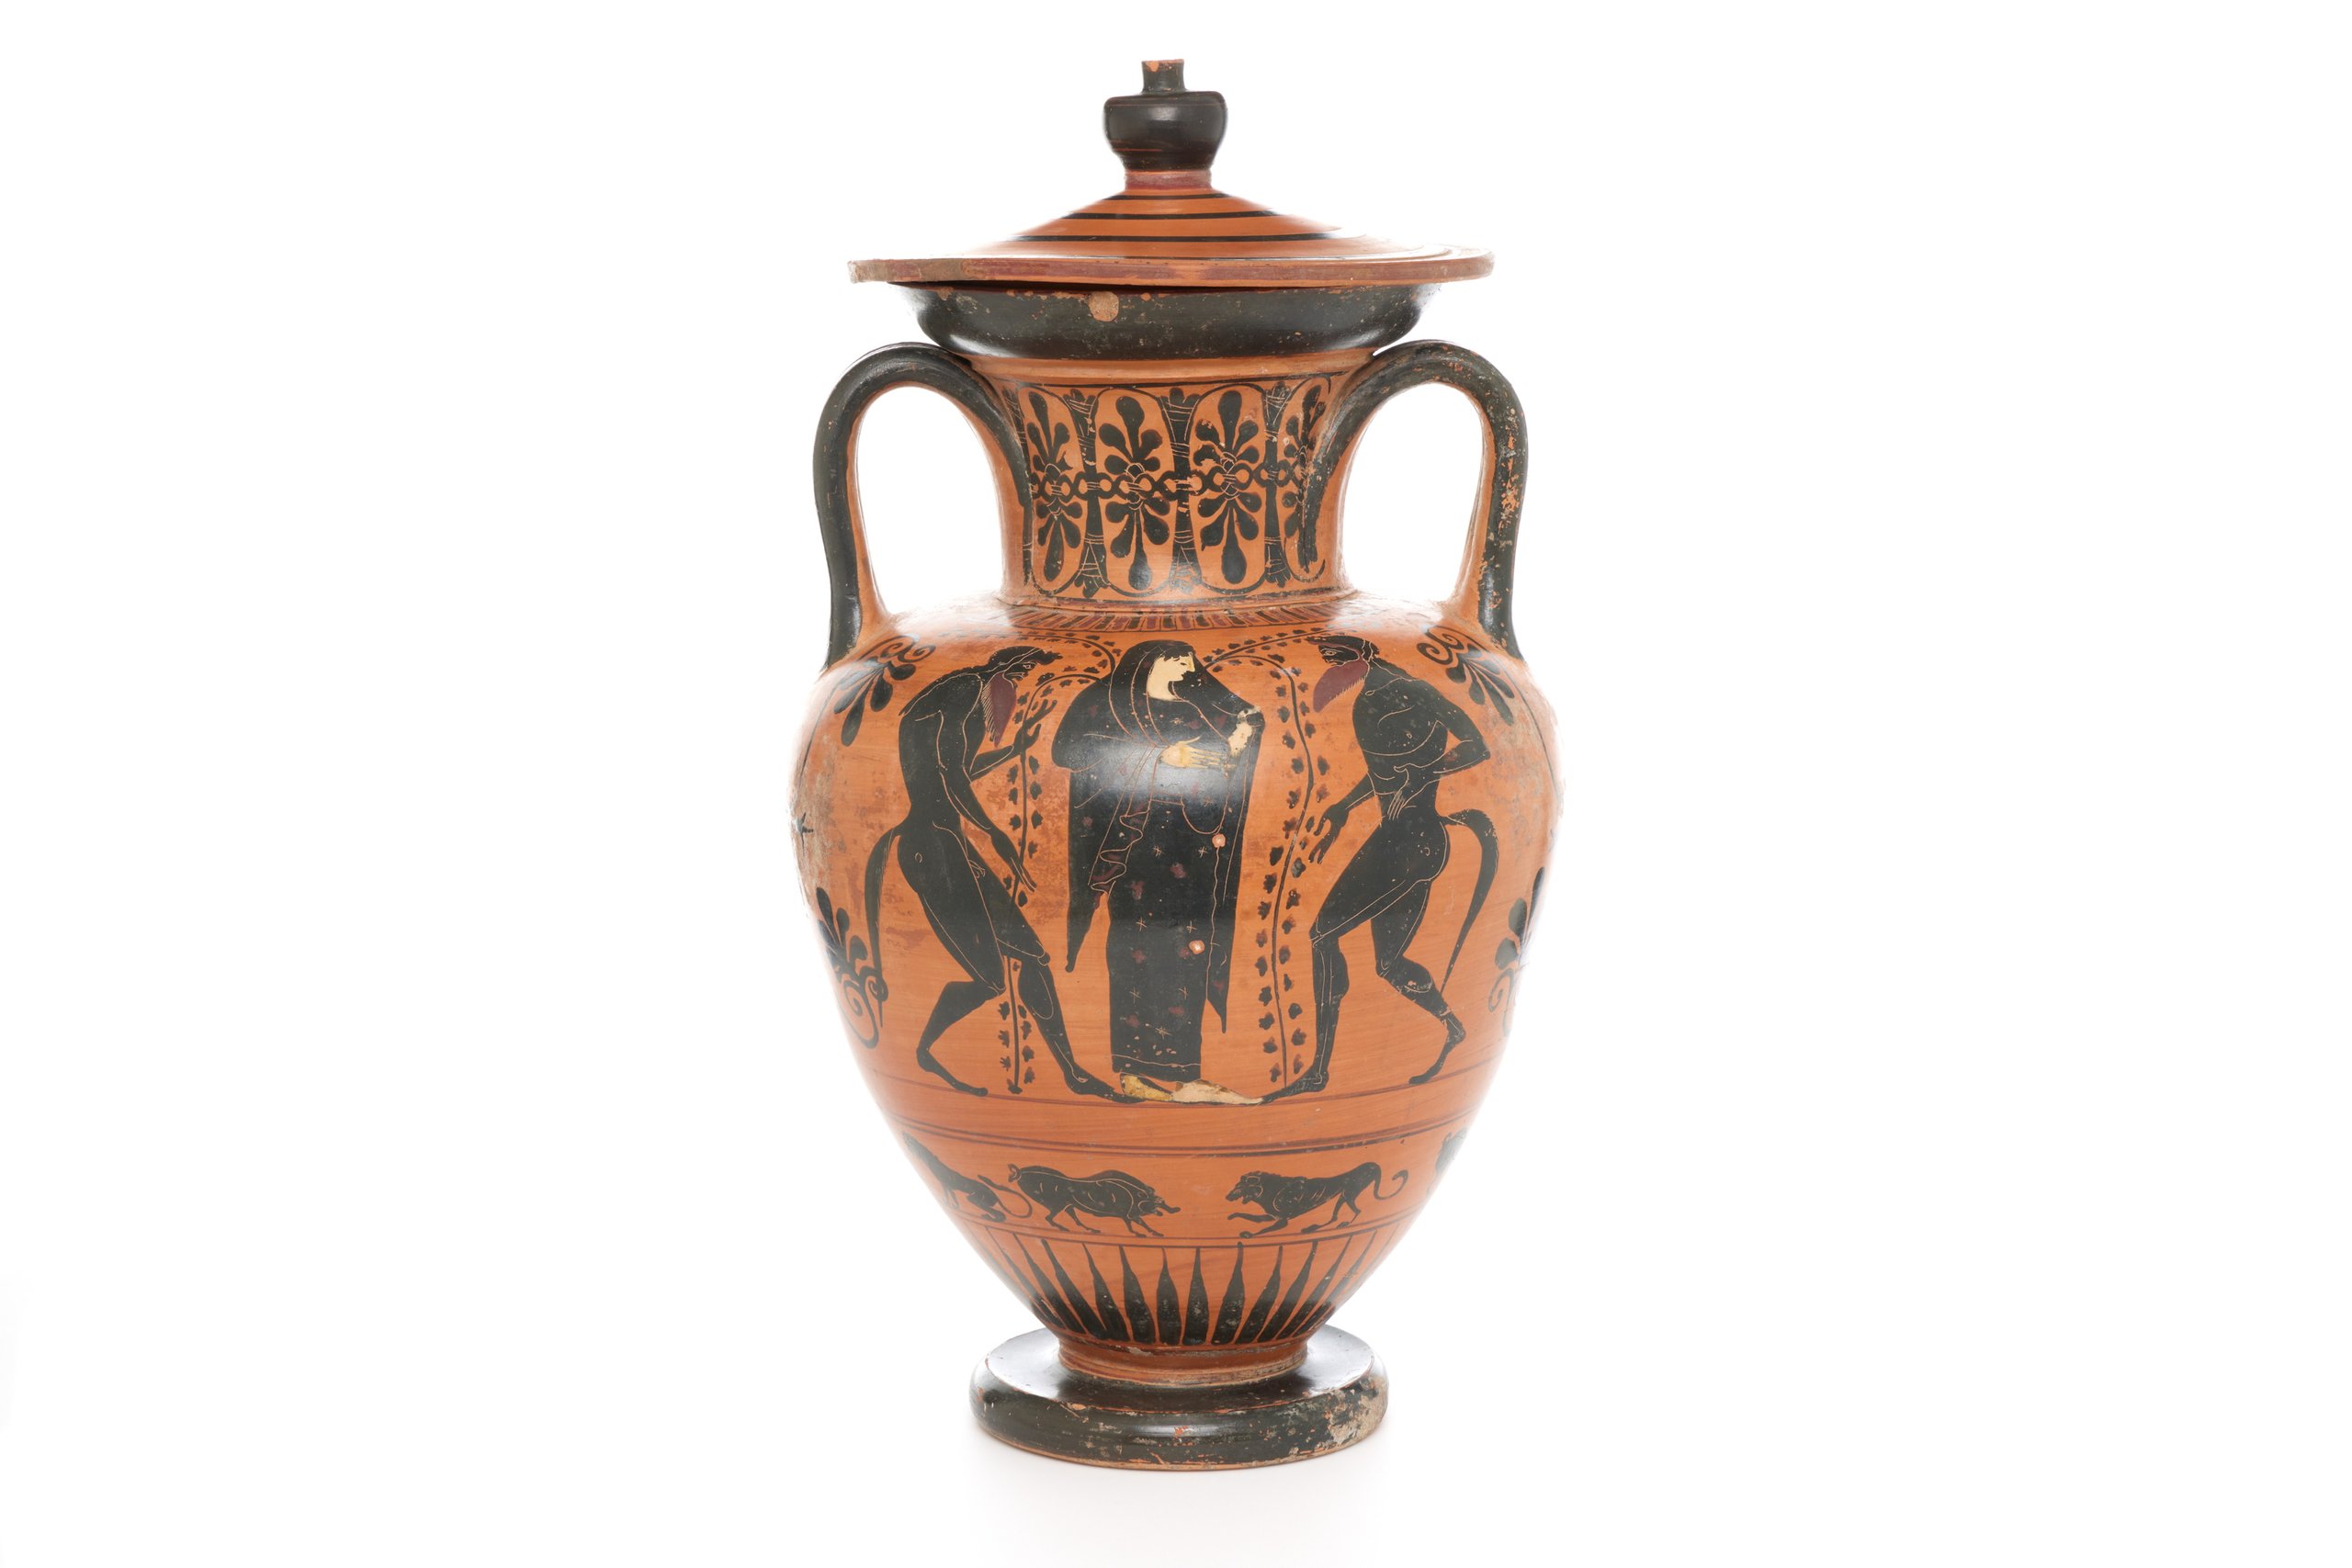 Attic black figure amphora